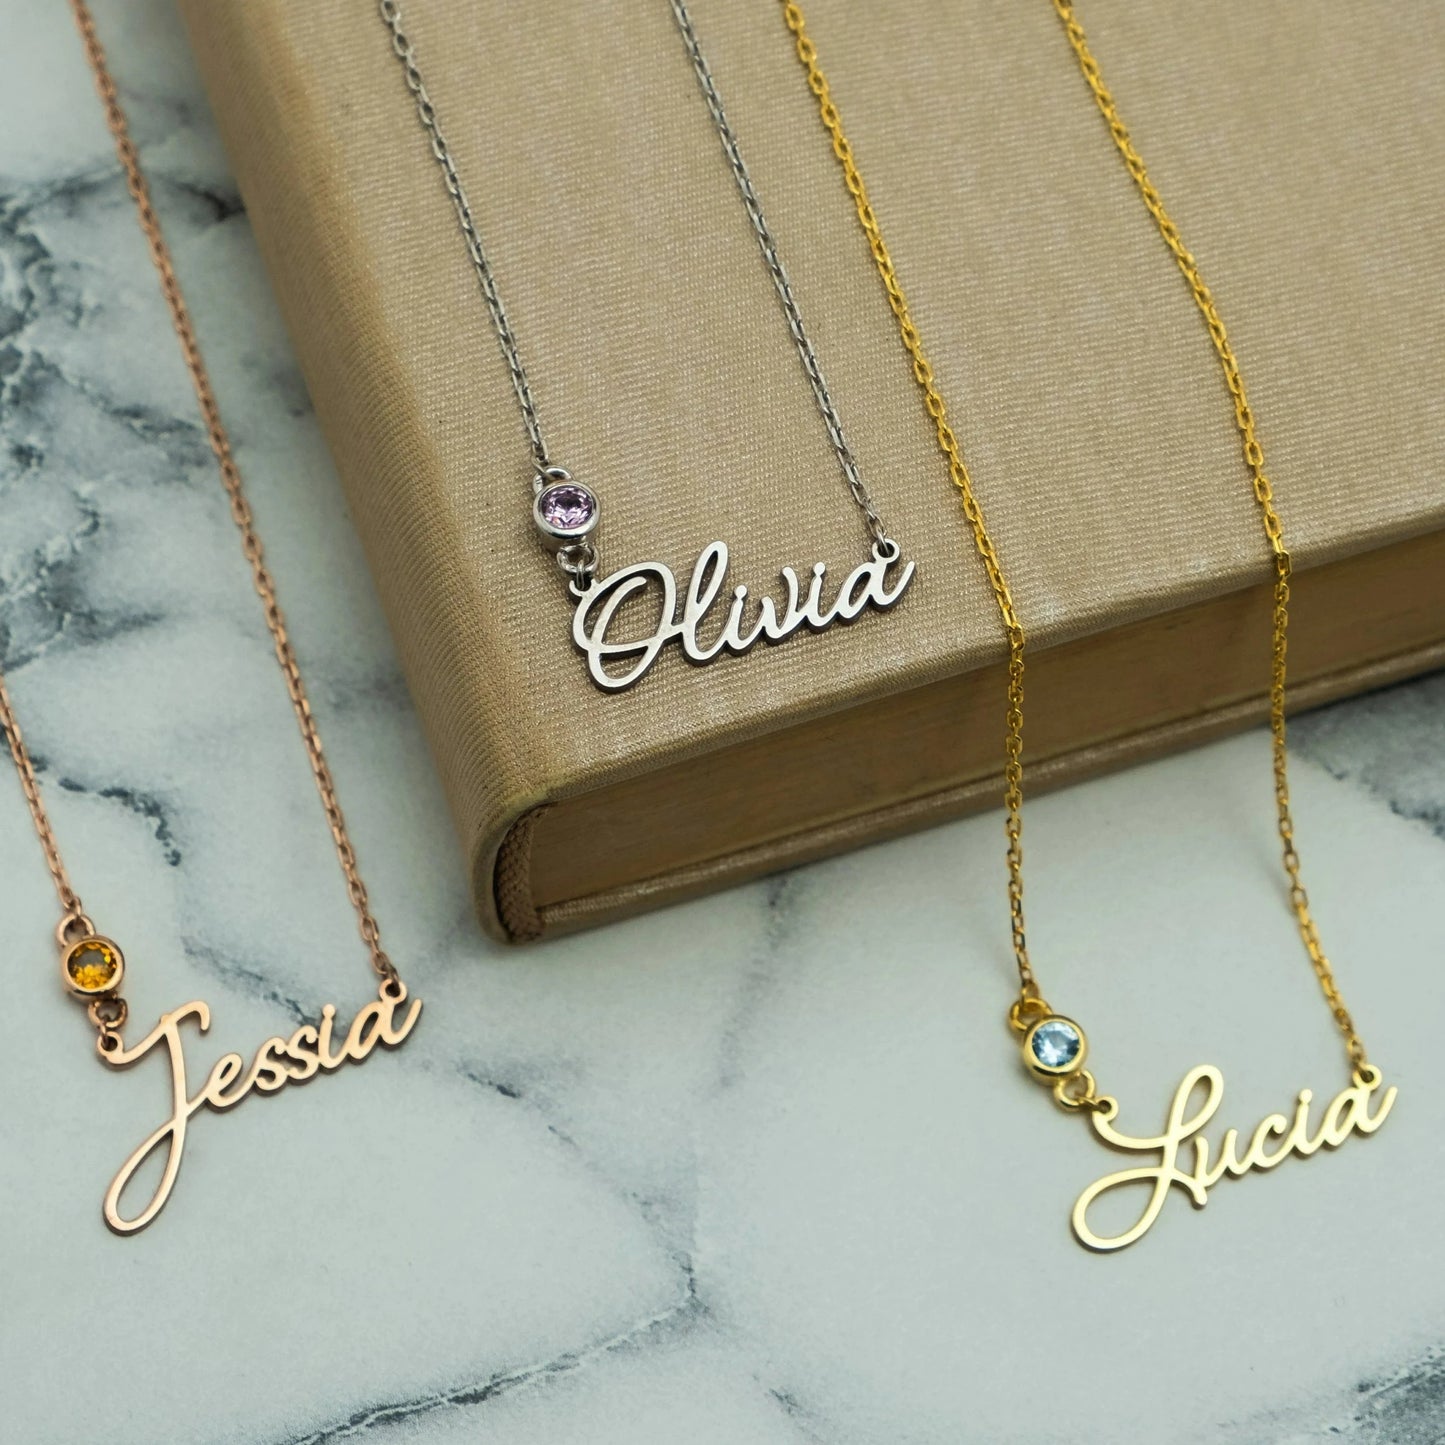 Custom Birthstone Necklace - Dubai's Finest Gift Idea